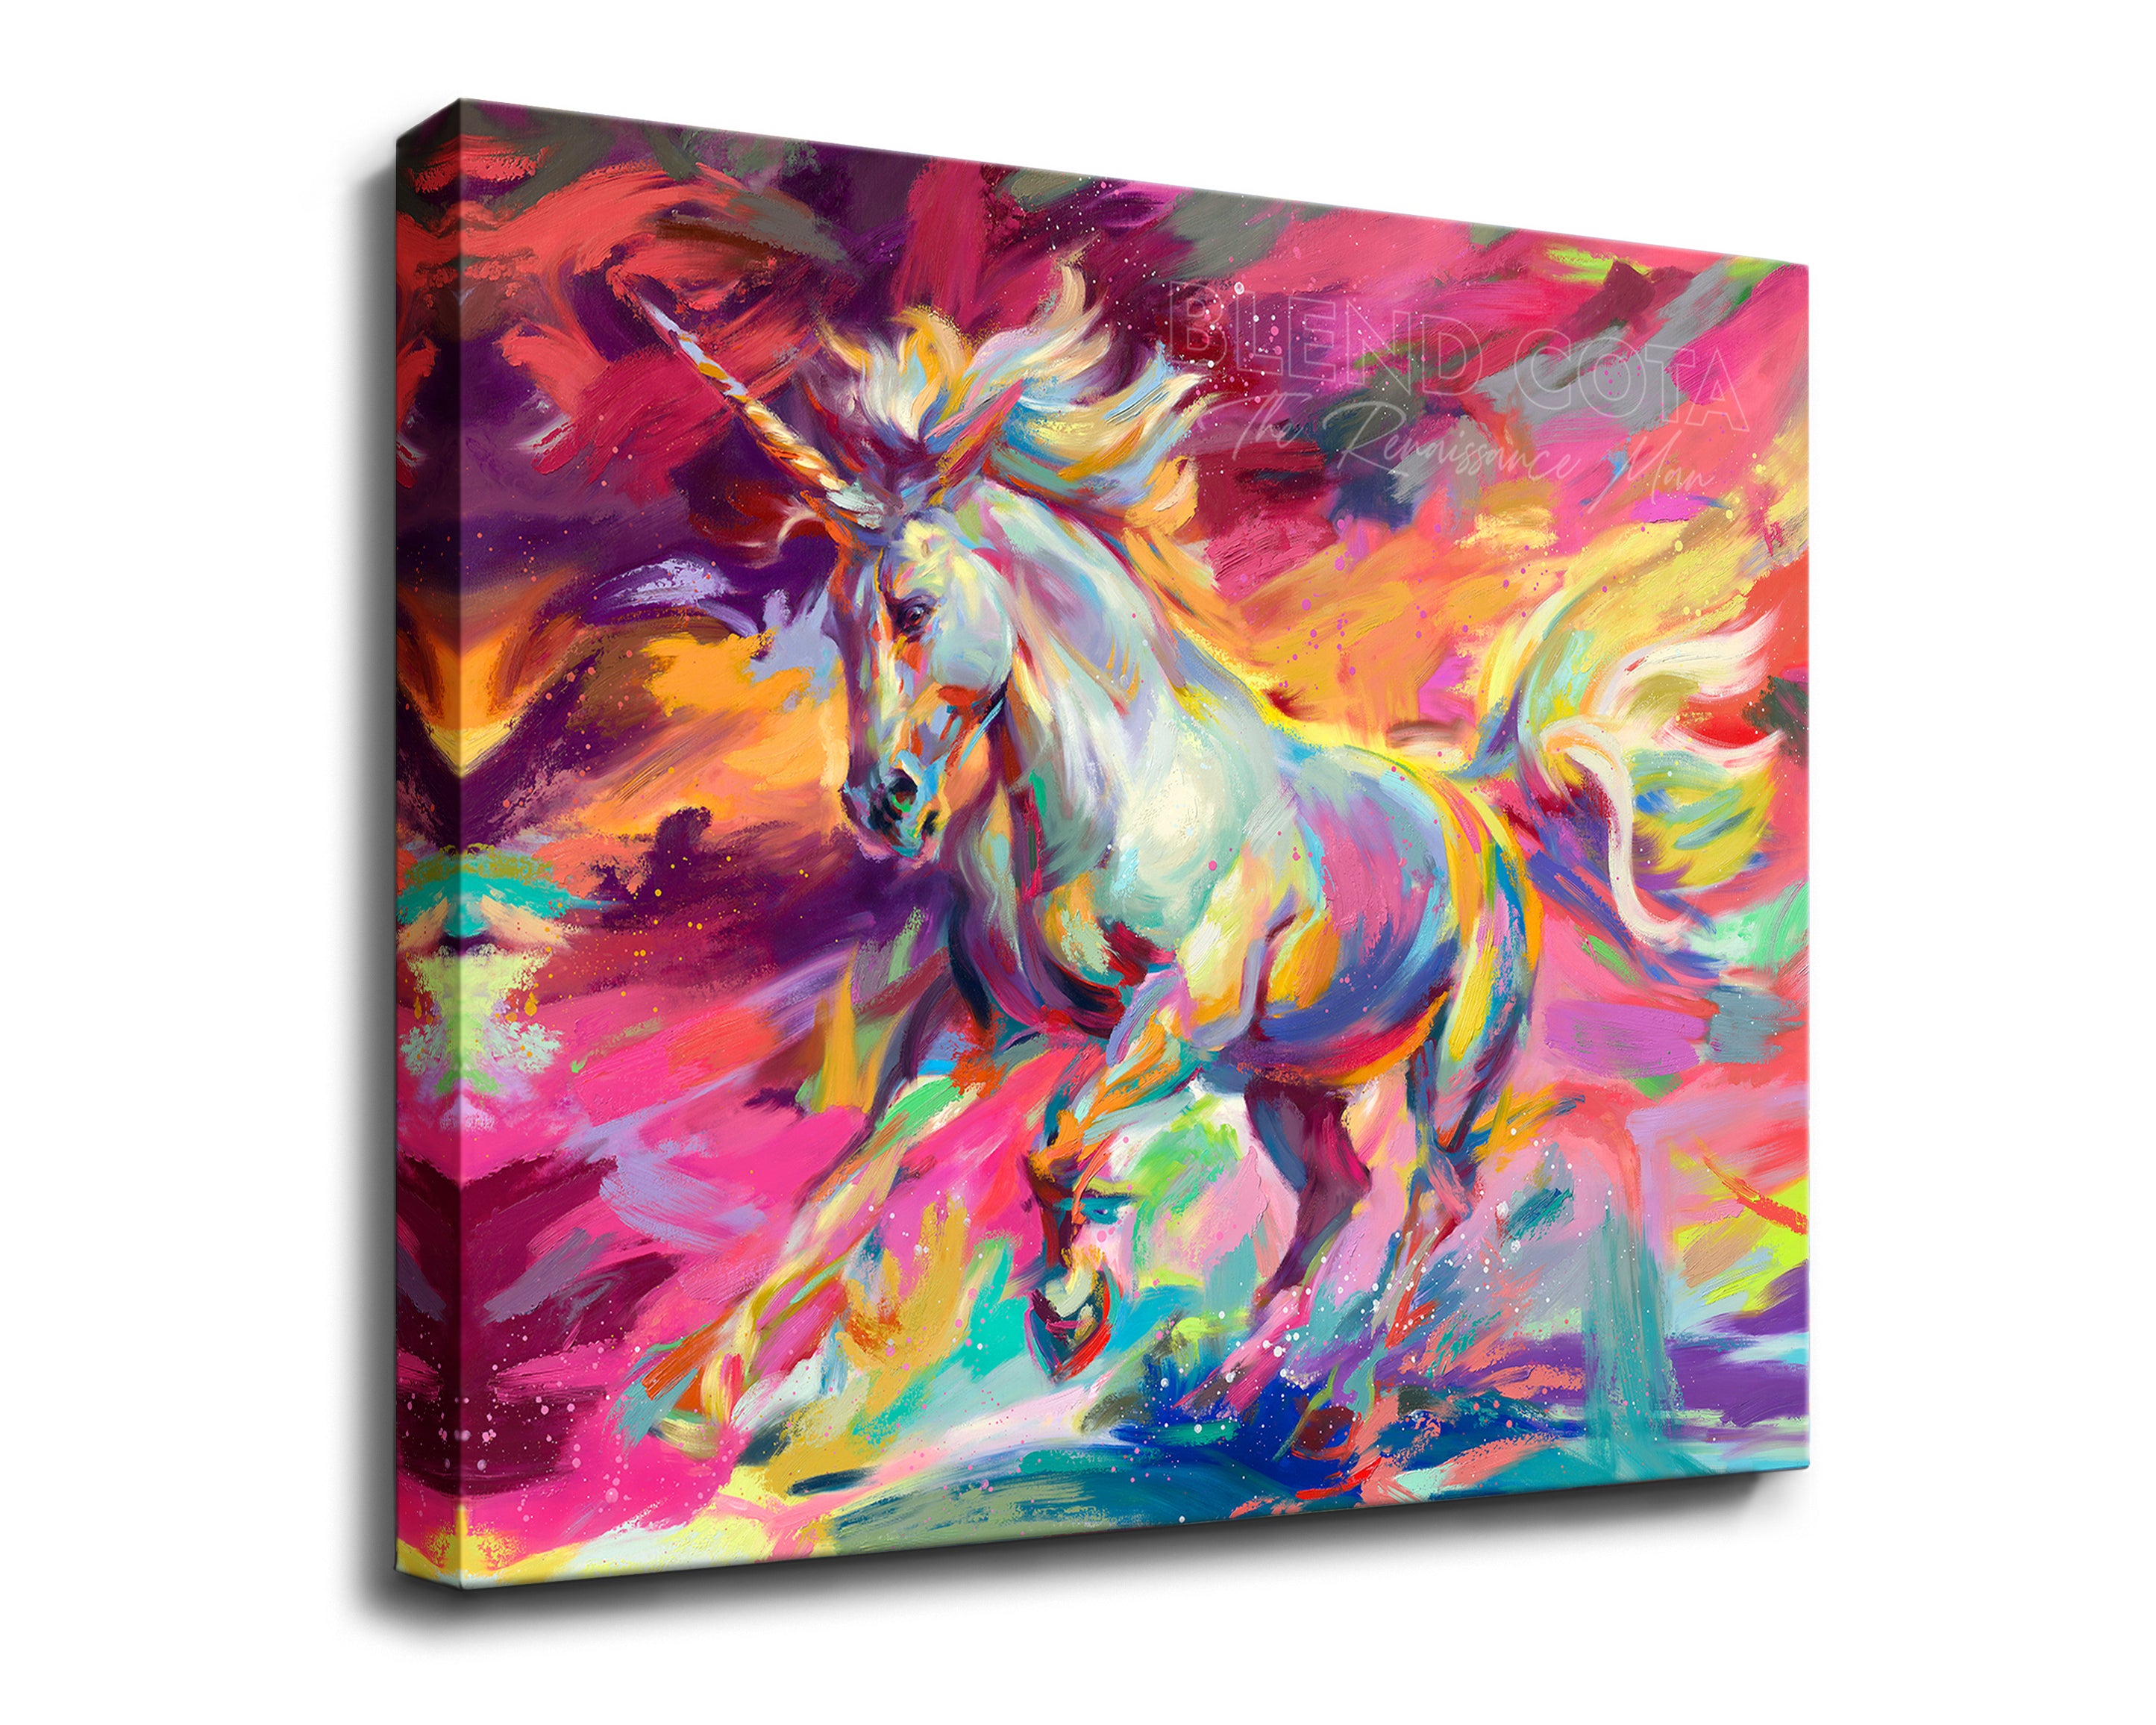 Unicorn - Blend Cota Art Print on Canvas - Blend Cota Studios